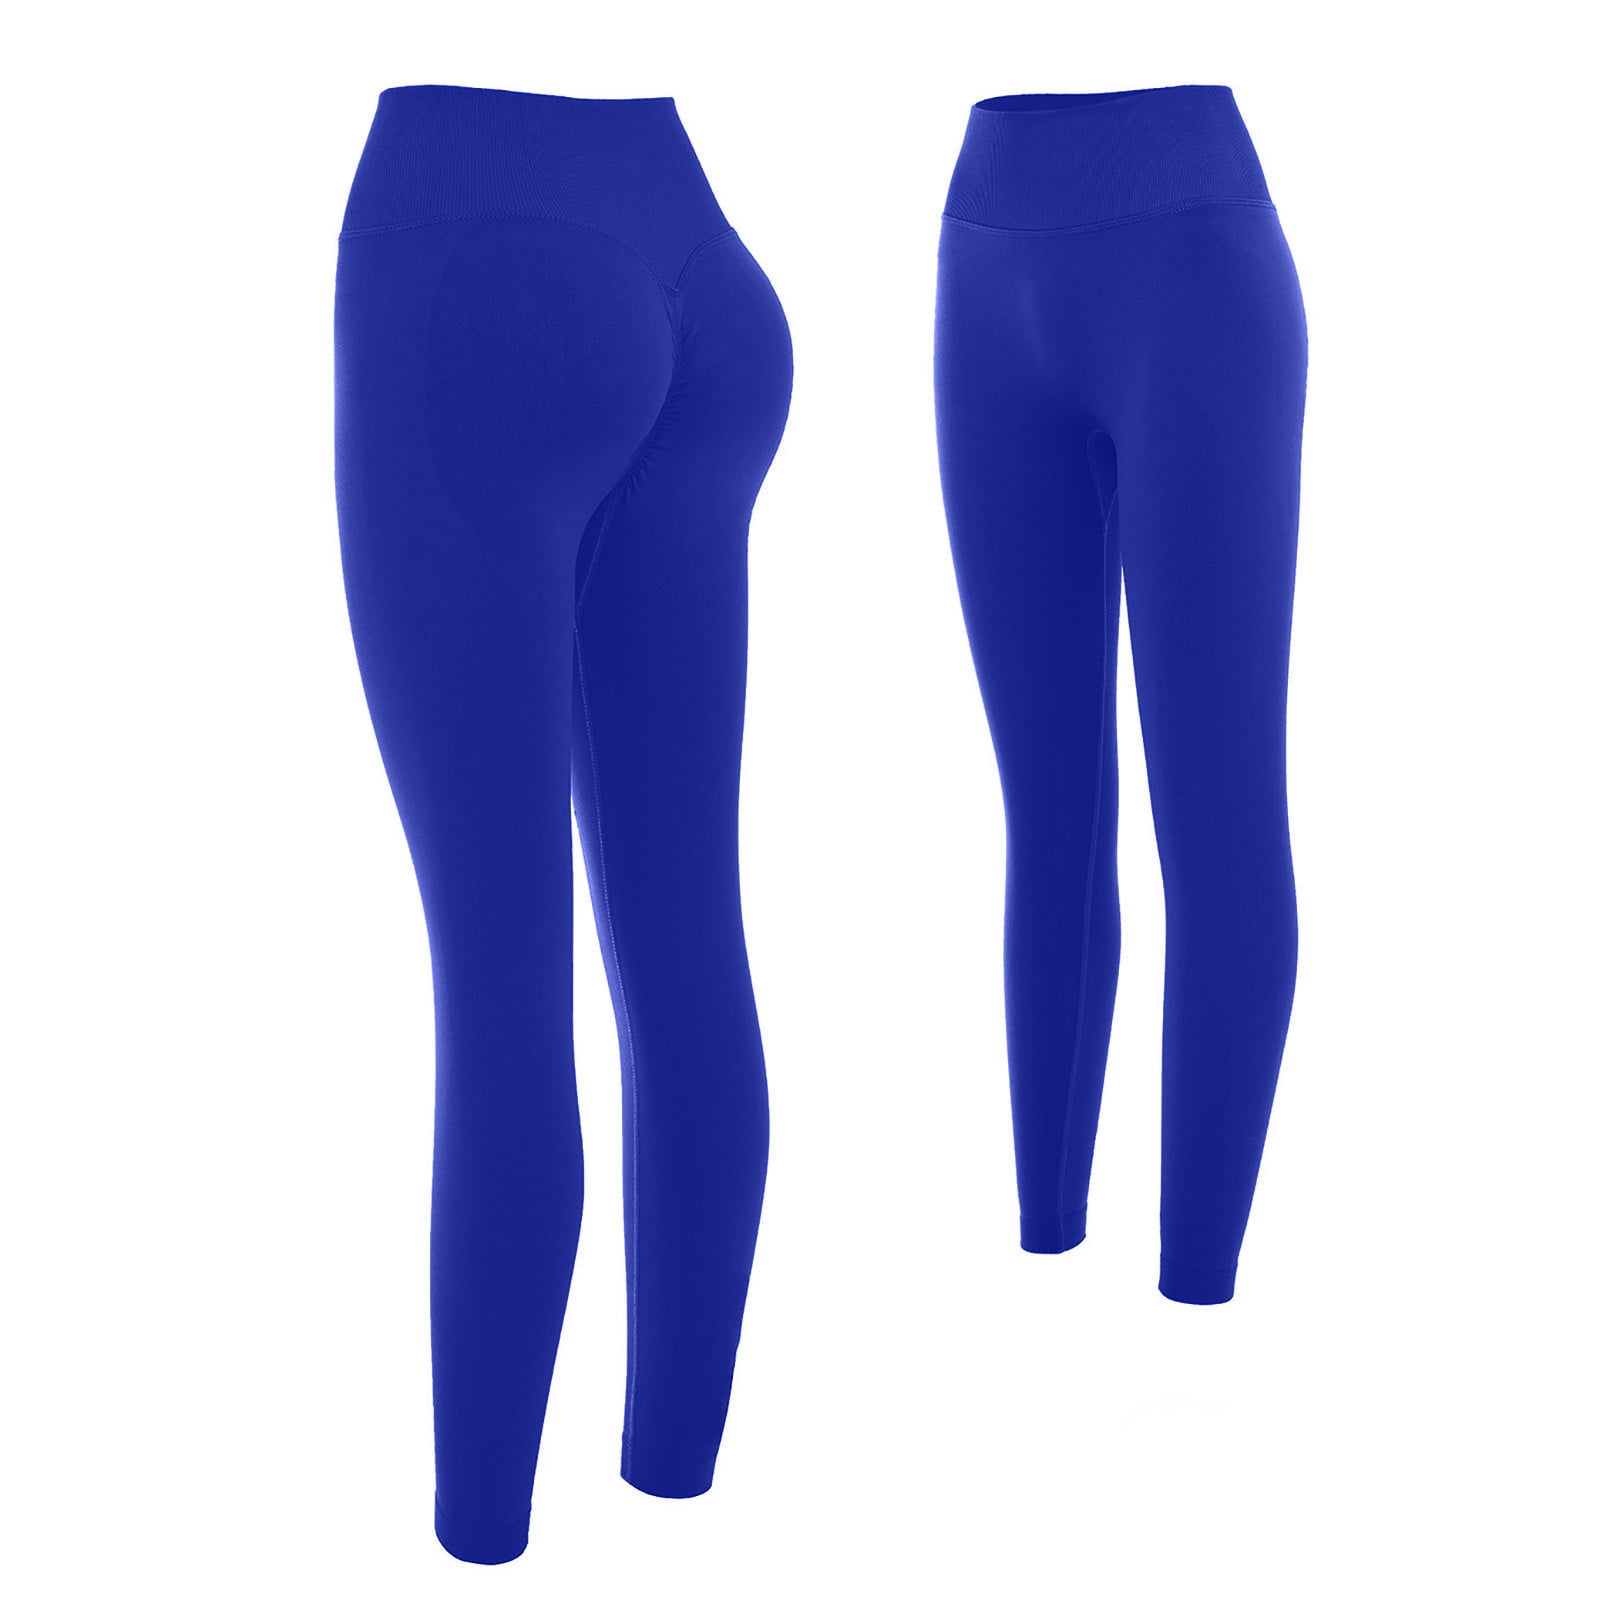 Shascullfites Pants Comfort Cotton Leggings Women High Rise Leggings Skinny Fitness  Workout Blue Female Compression Legging - Leggings - AliExpress